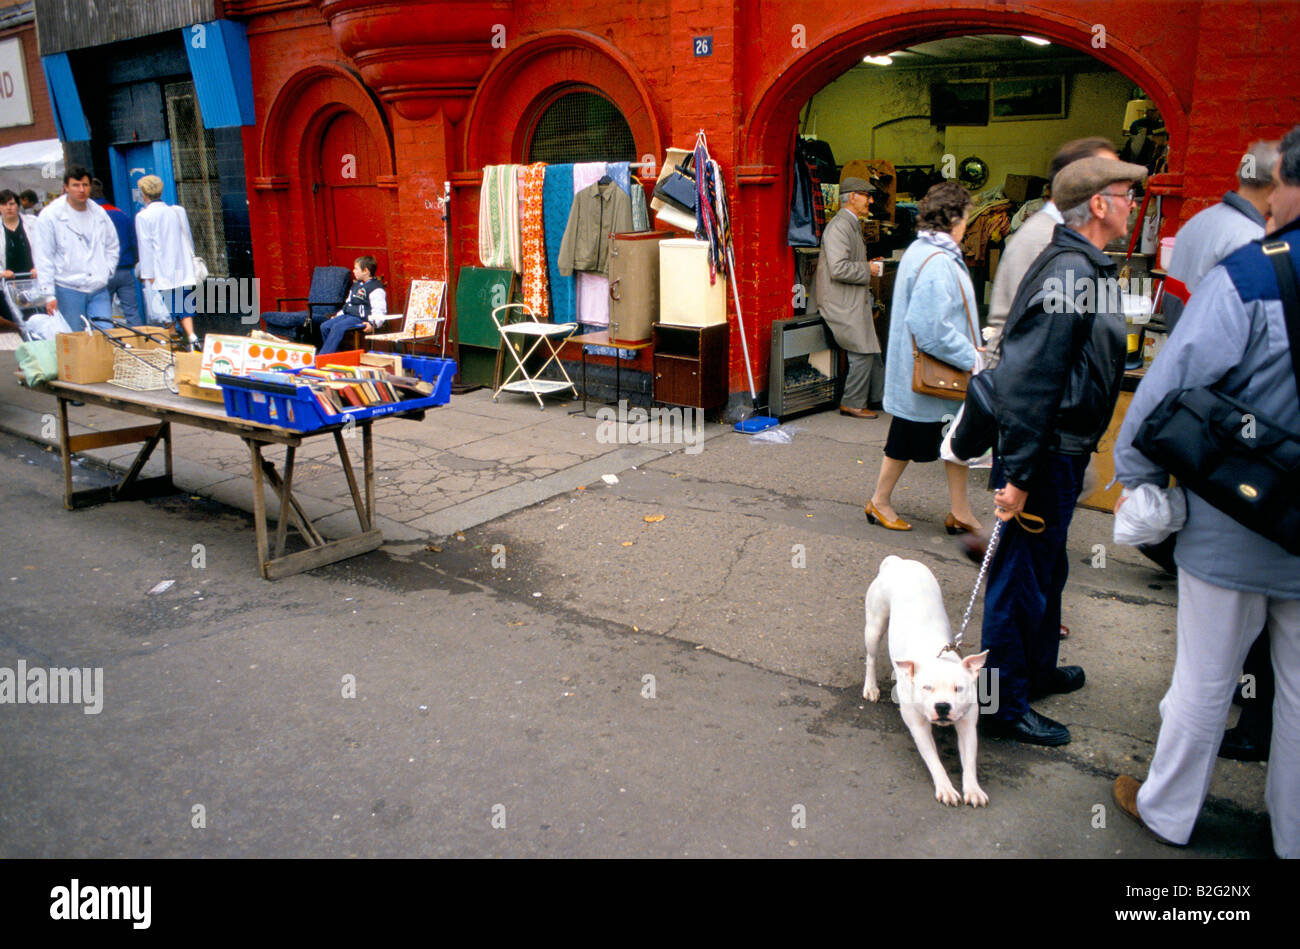 market stalls on a street in glasgow Stock Photo